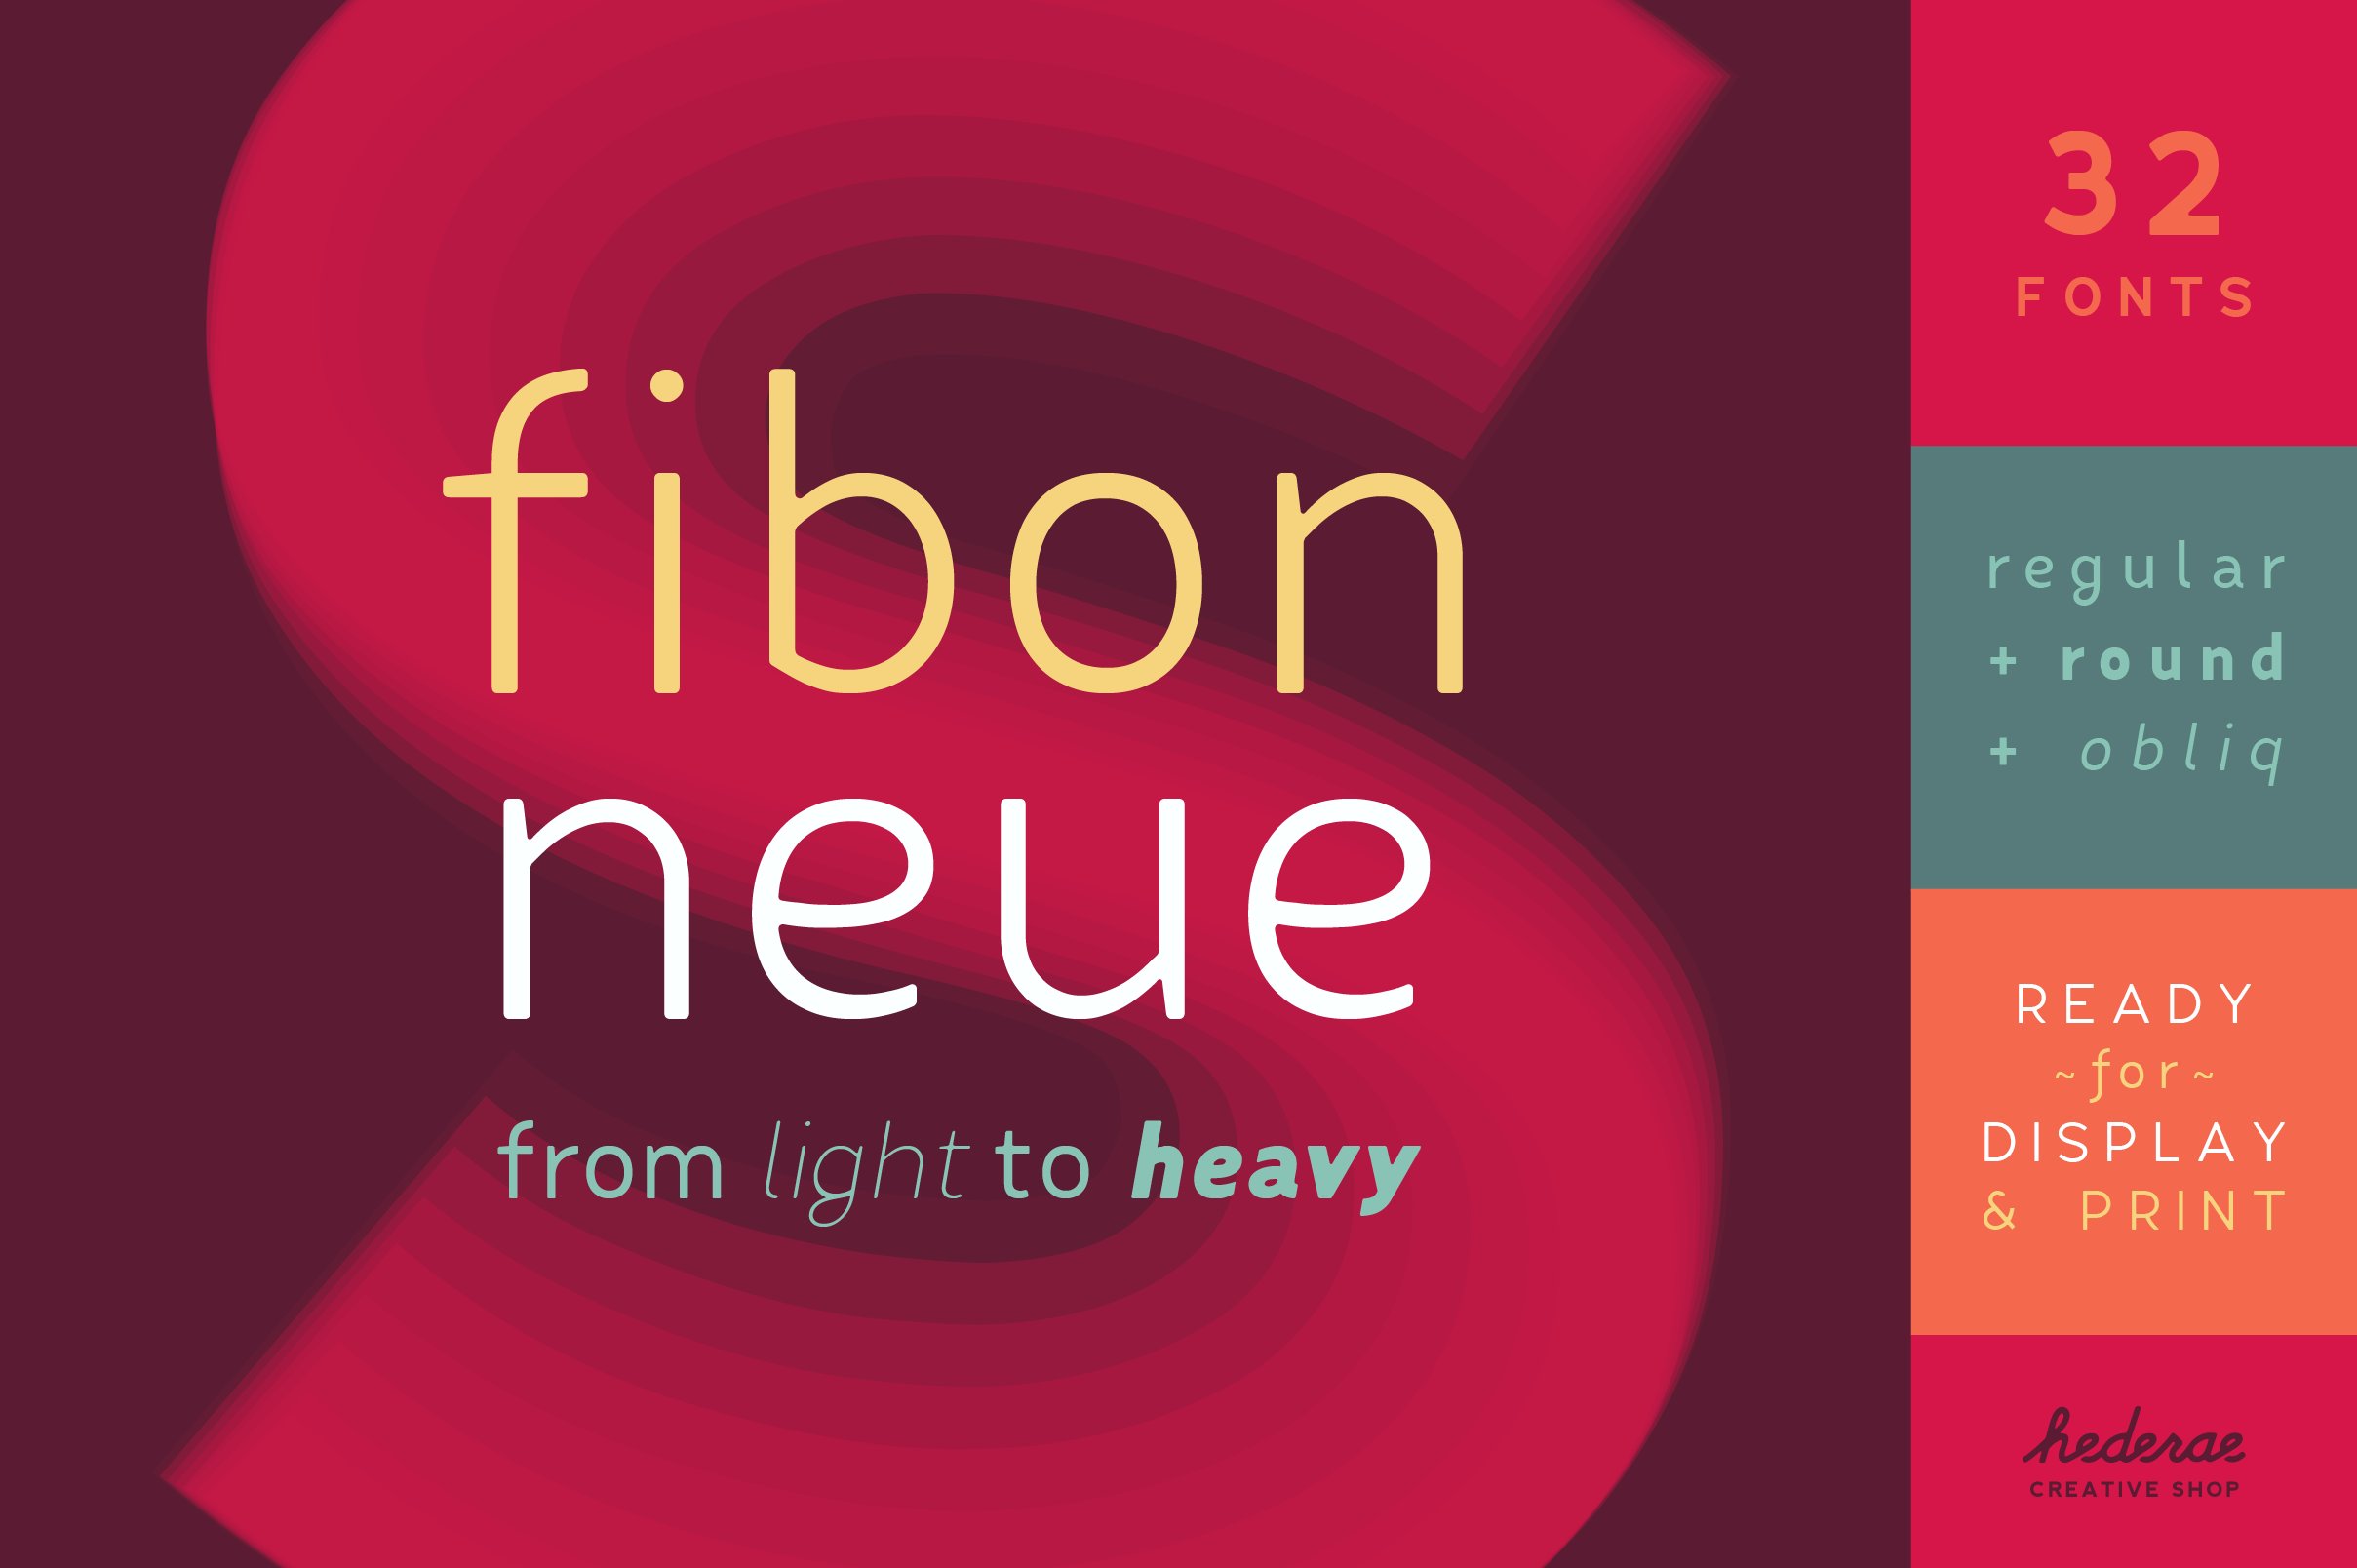 Fibon Neue Family cover image.